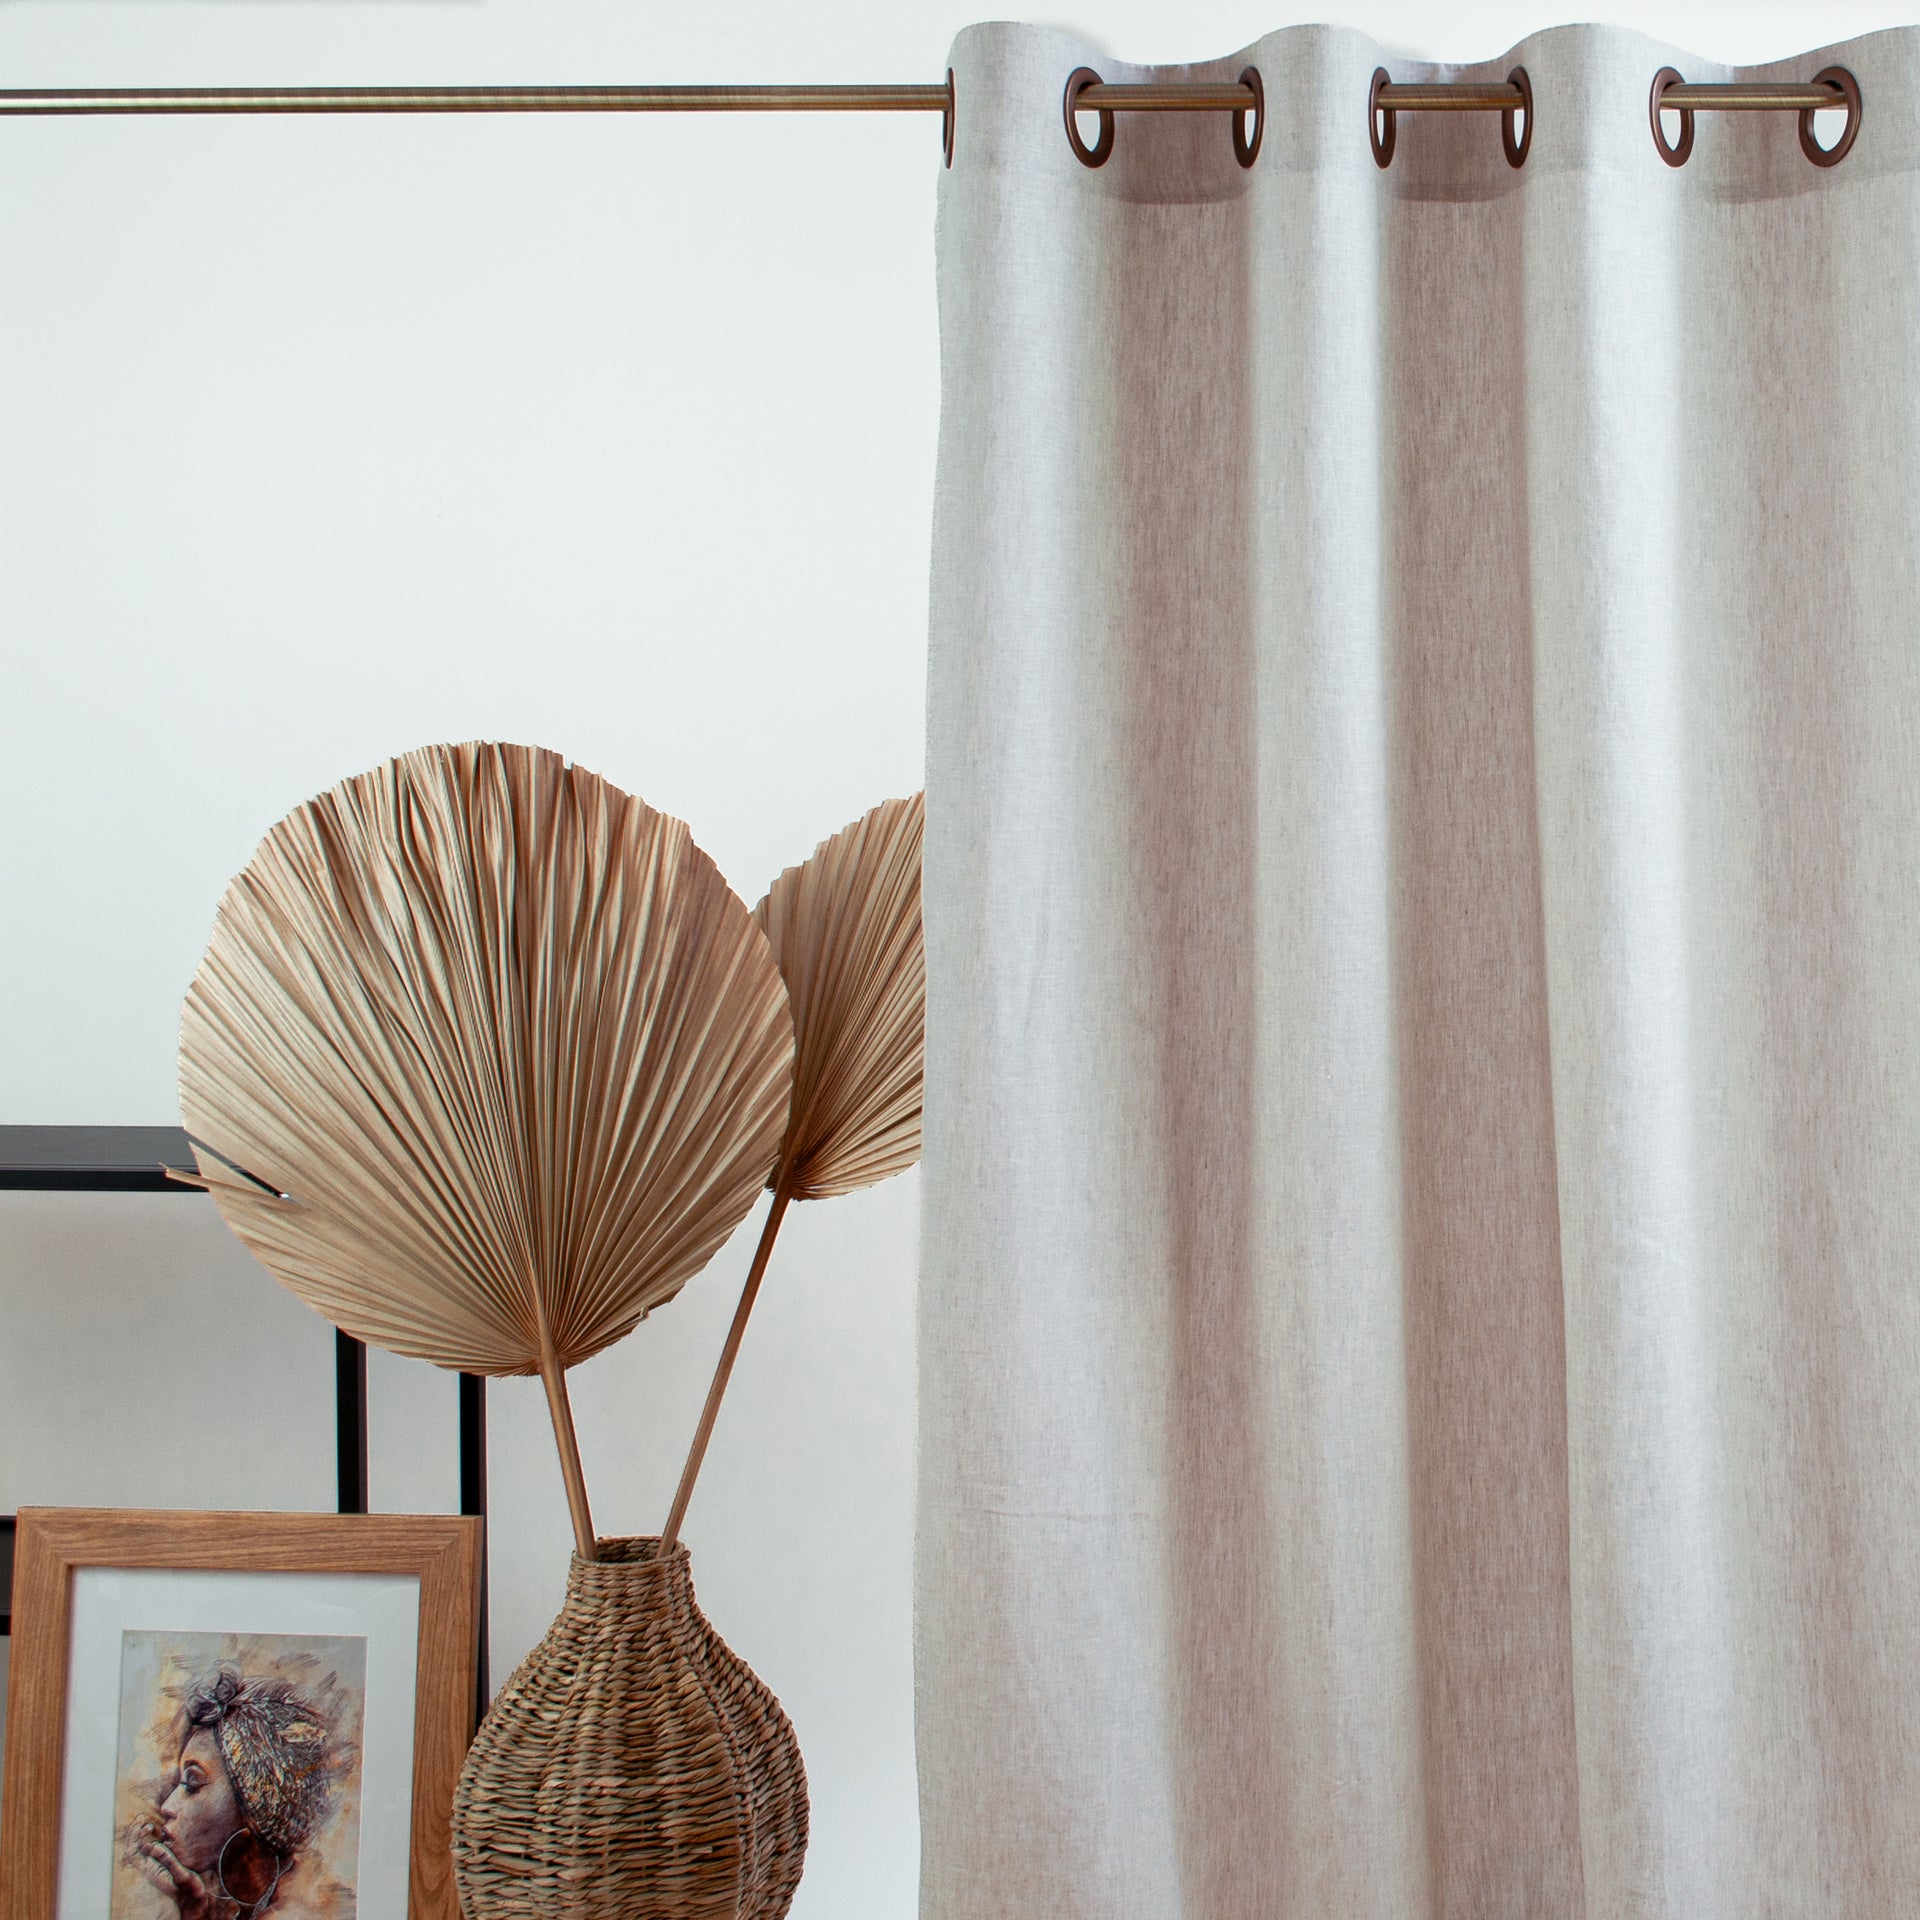 Grommet Top Linen Curtain Panel - Eyelet Window Treatments - Natural 100%  Linen Drapery